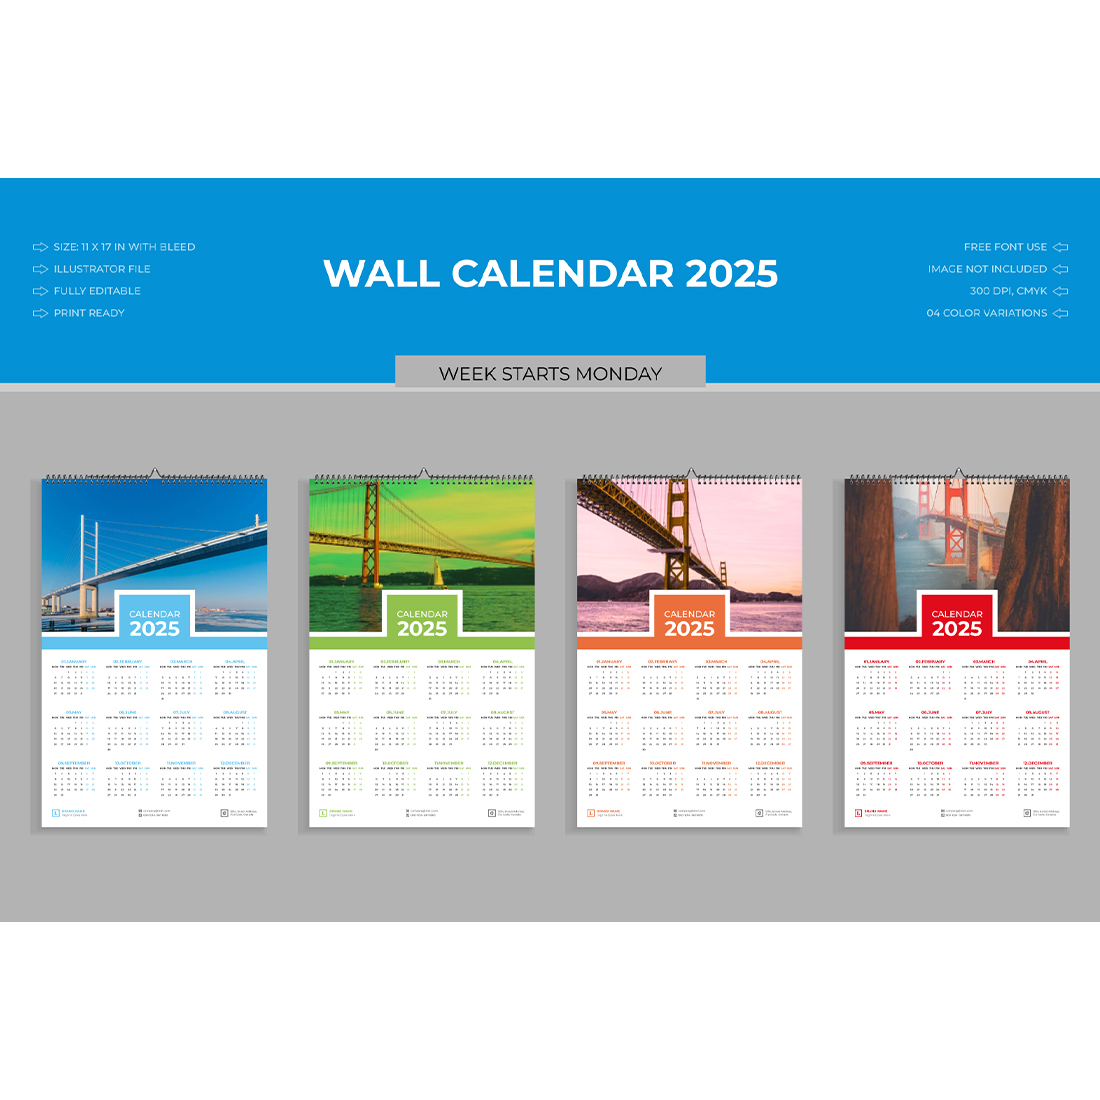 Wall Calendar Design 2025 cover image.